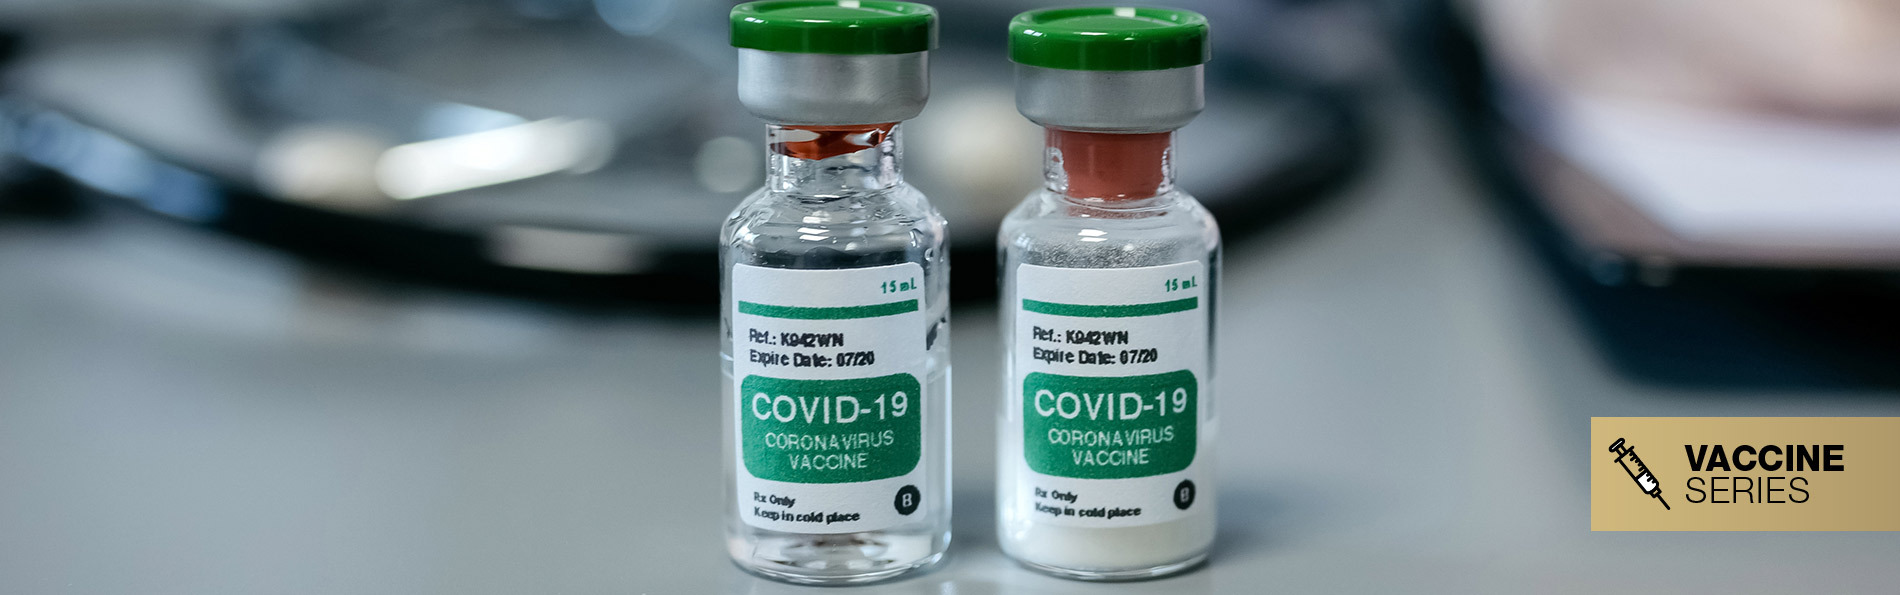 Two vaccine vials on doctor's desk